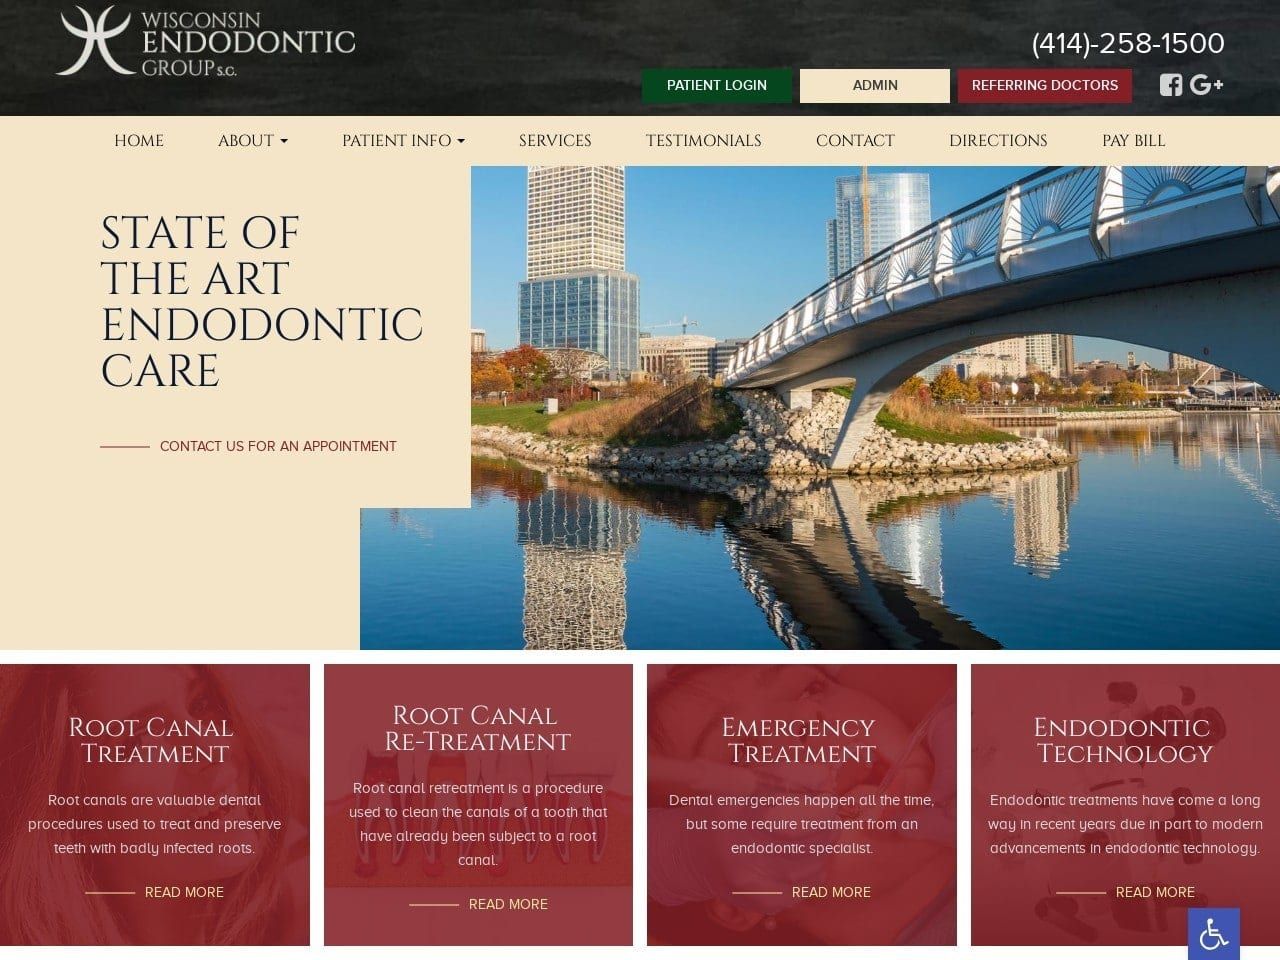 Wisconsin Endodontics Group Website Screenshot From Url Wiendogroup.com